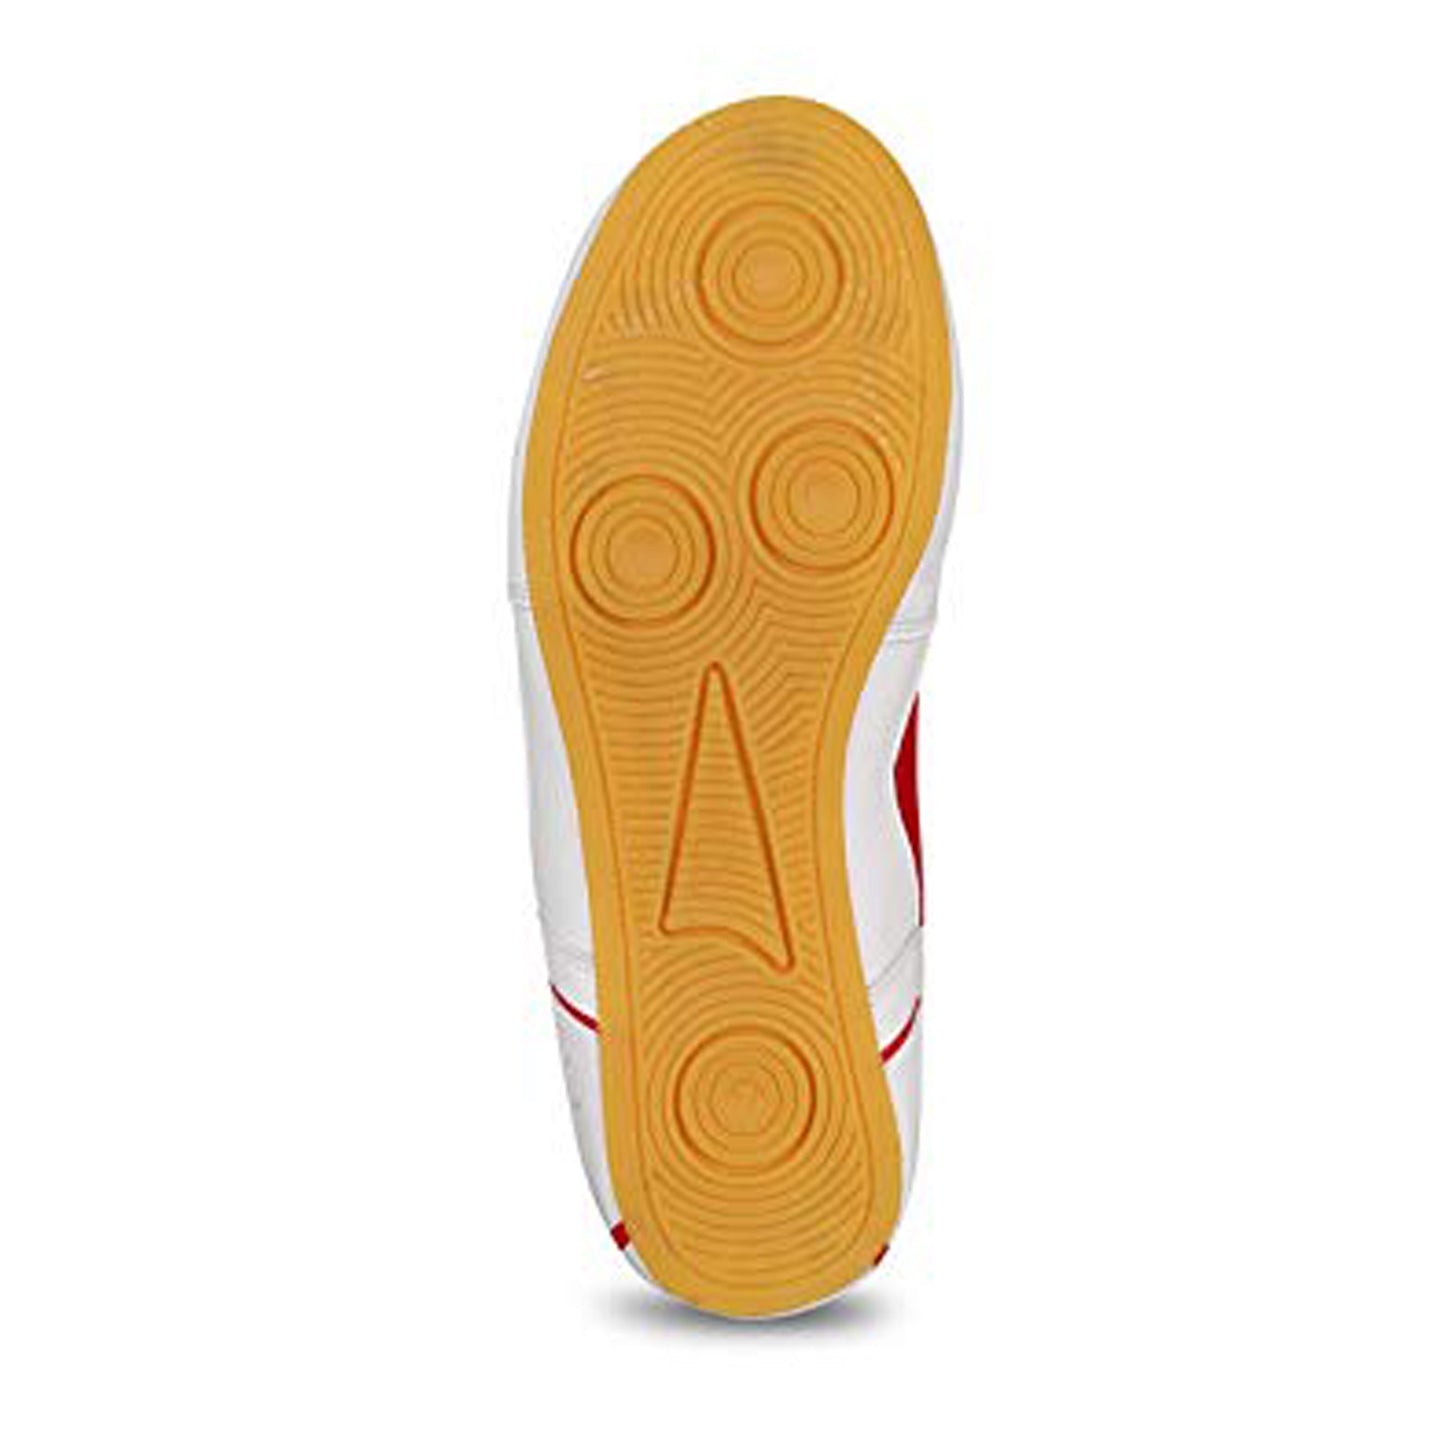 Vector X Razor 2.0 Kabaddi Shoes for Men, Red/White - Best Price online Prokicksports.com